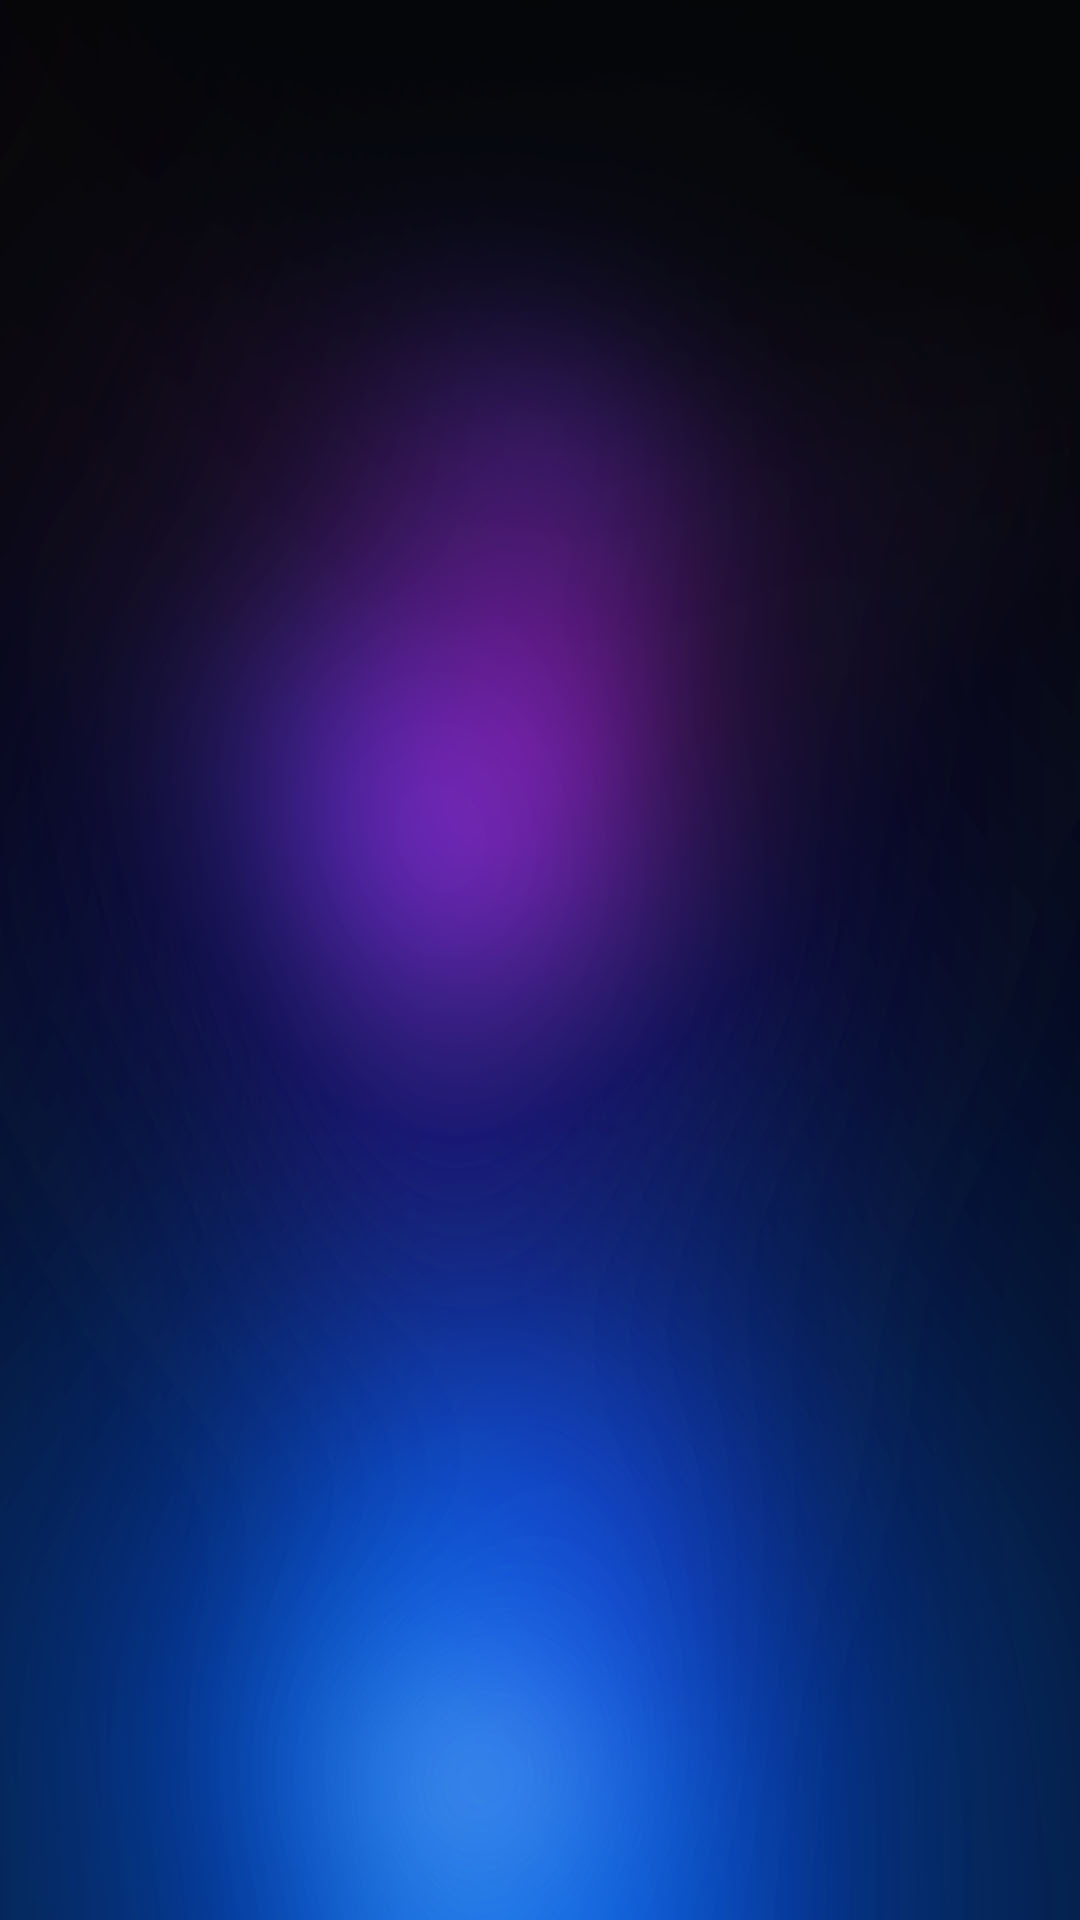 1080x1920, Purple Blue Gradient Samsung Android Wallpaper - Gradient Wallpaper  4k Android - 1080x1920 Wallpaper 